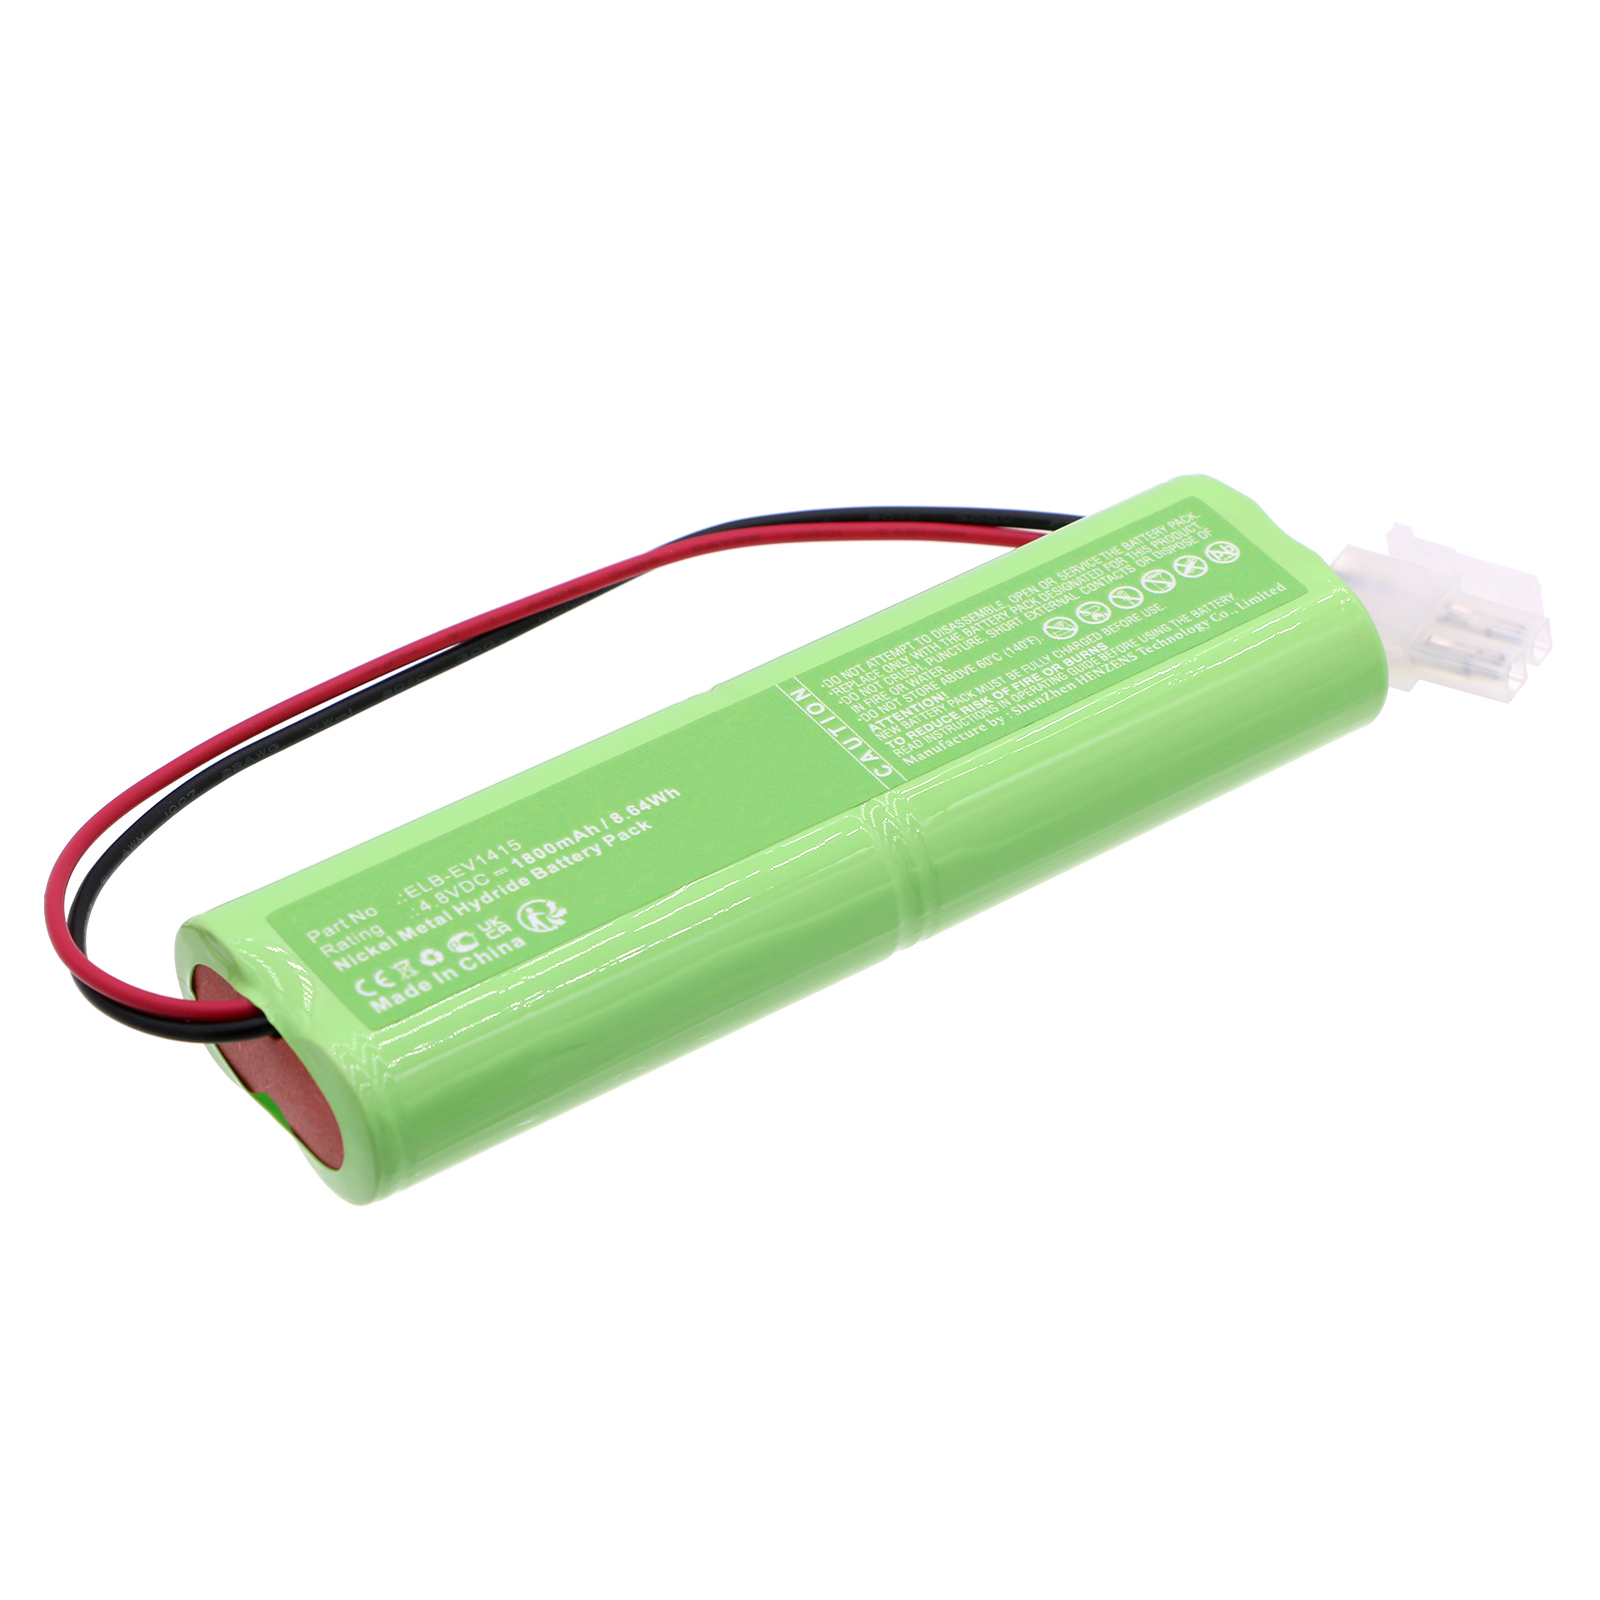 Batteries for EktorEmergency Lighting